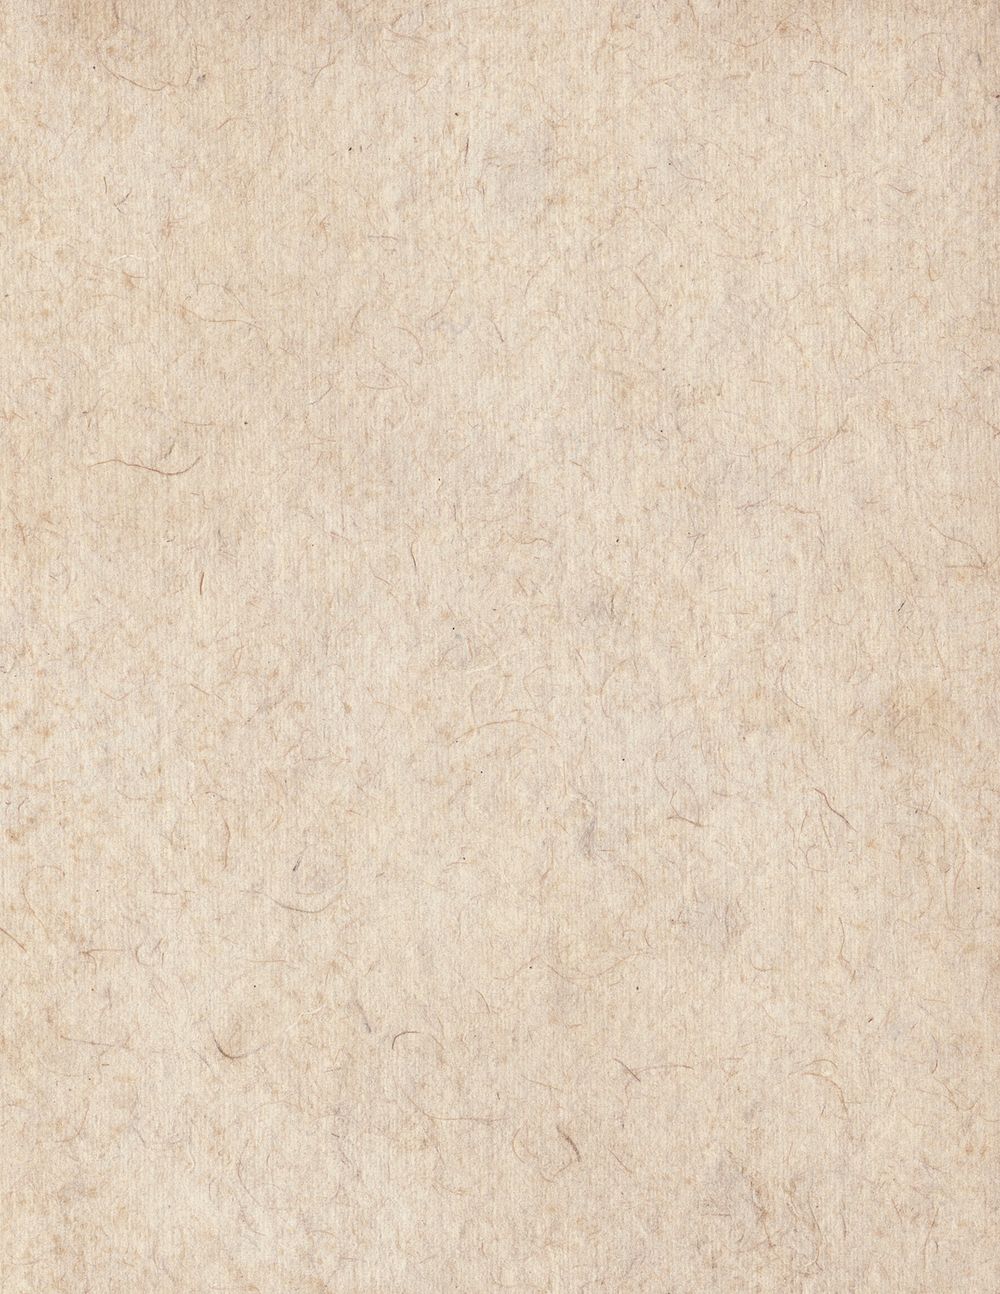 Old paper texture, beige background, simple design